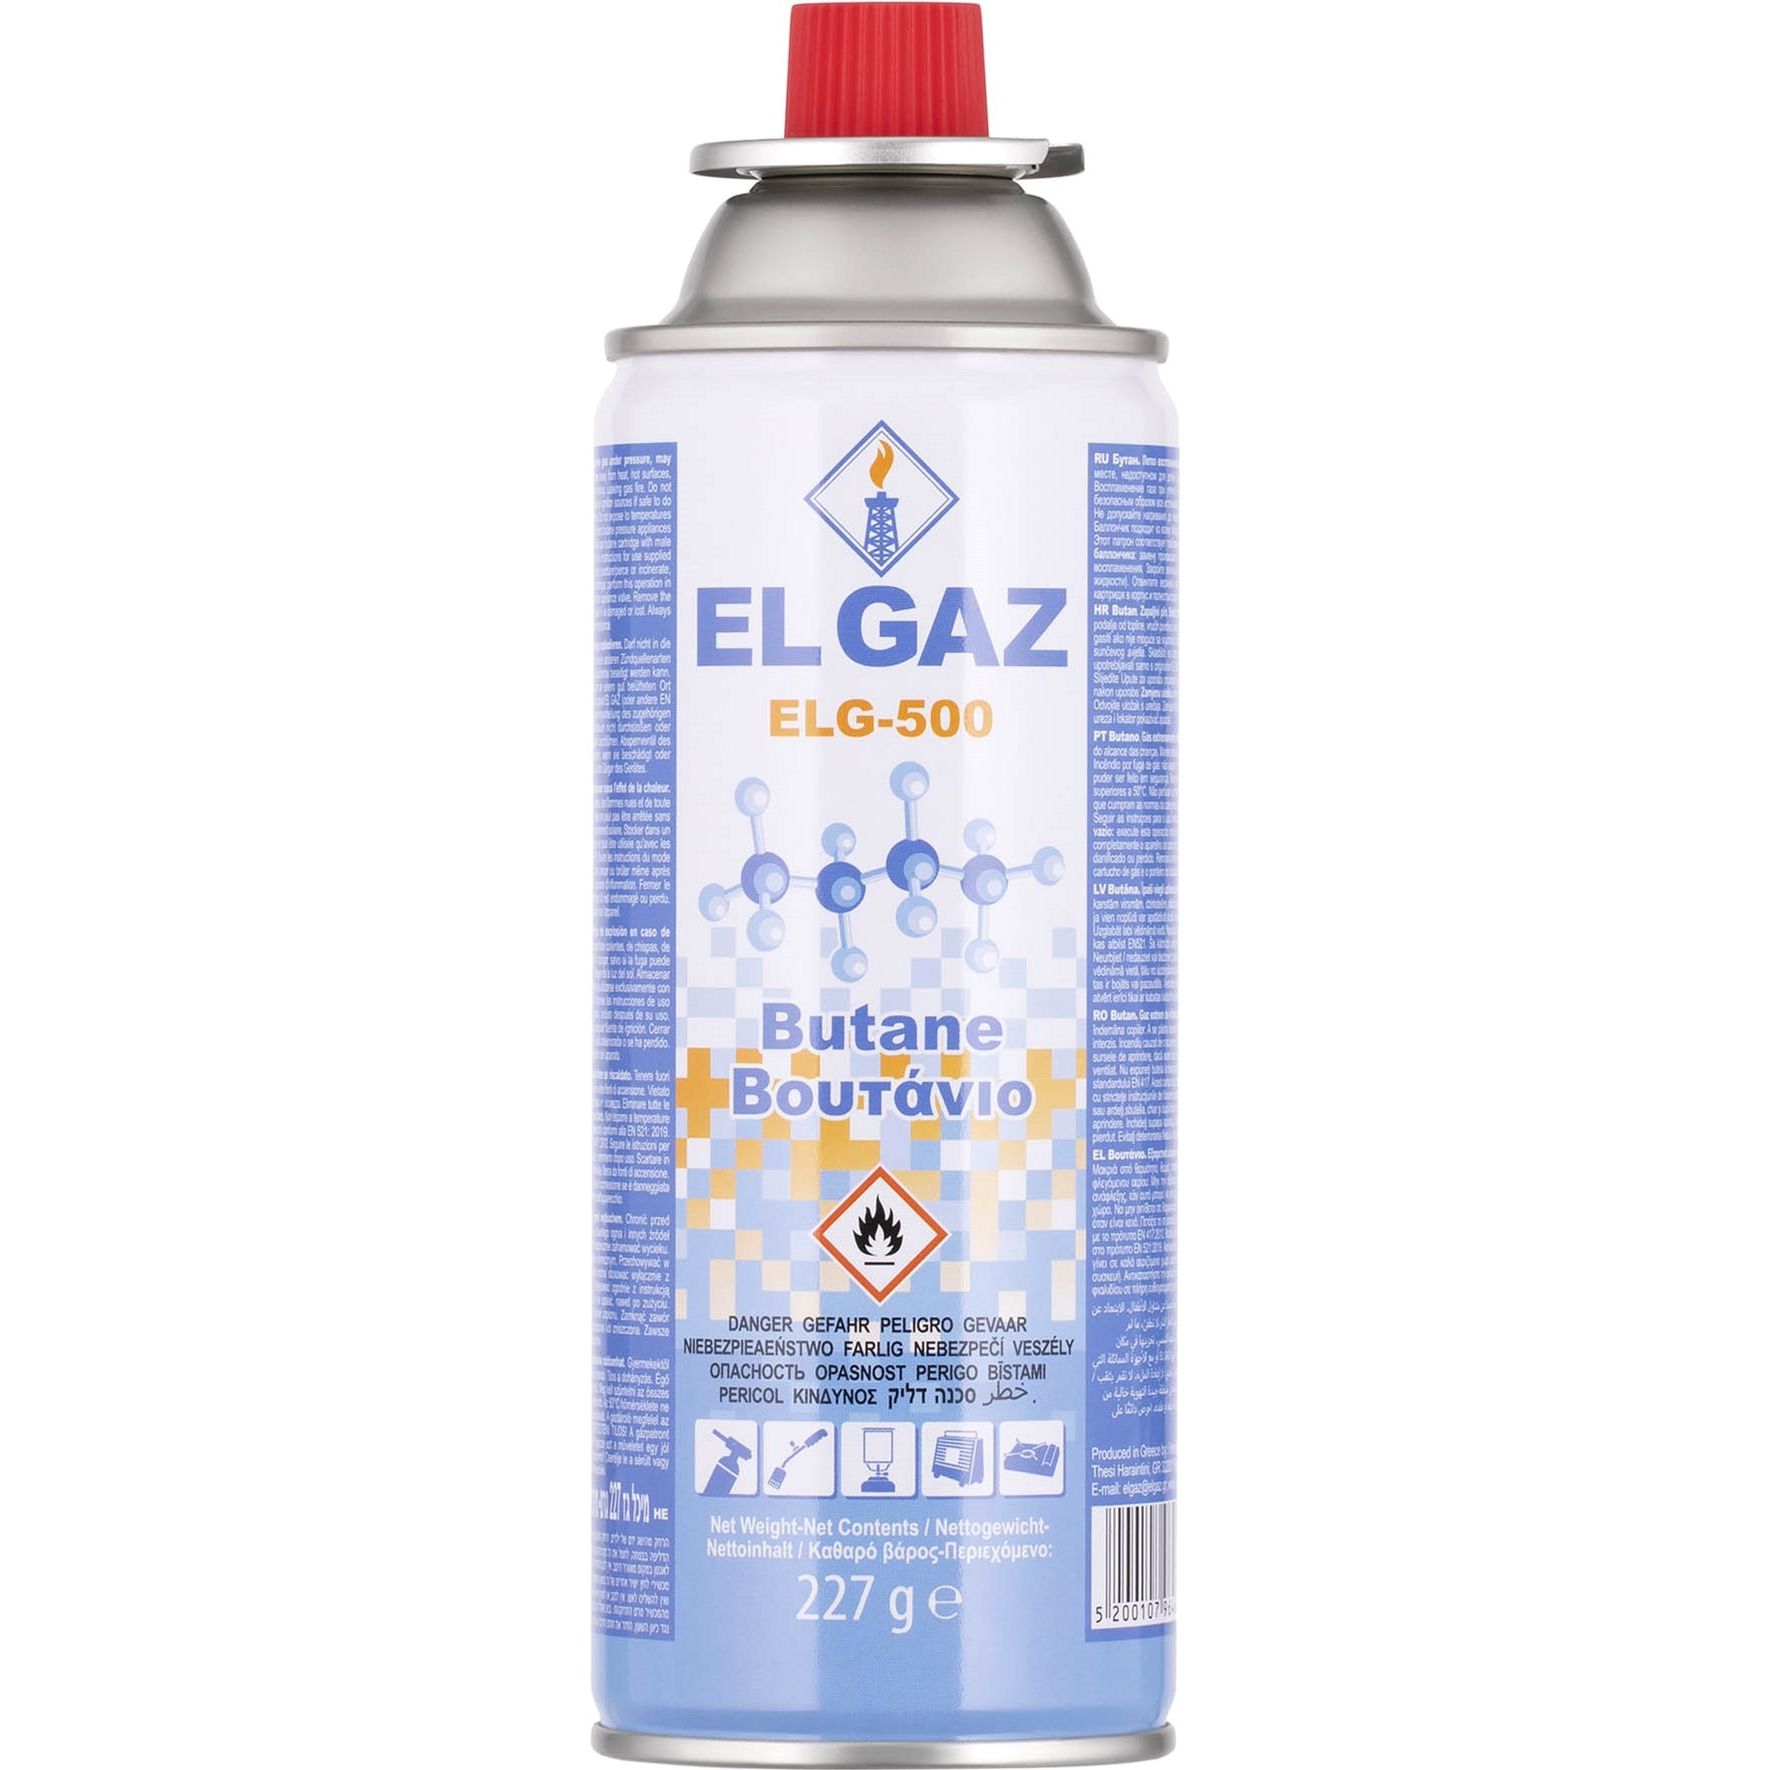 Баллон-картридж газовый El Gaz ELG-500 цанговый бутан 5.448 кг (227 г х 24 шт.) (104ELG-500-24) - фото 2